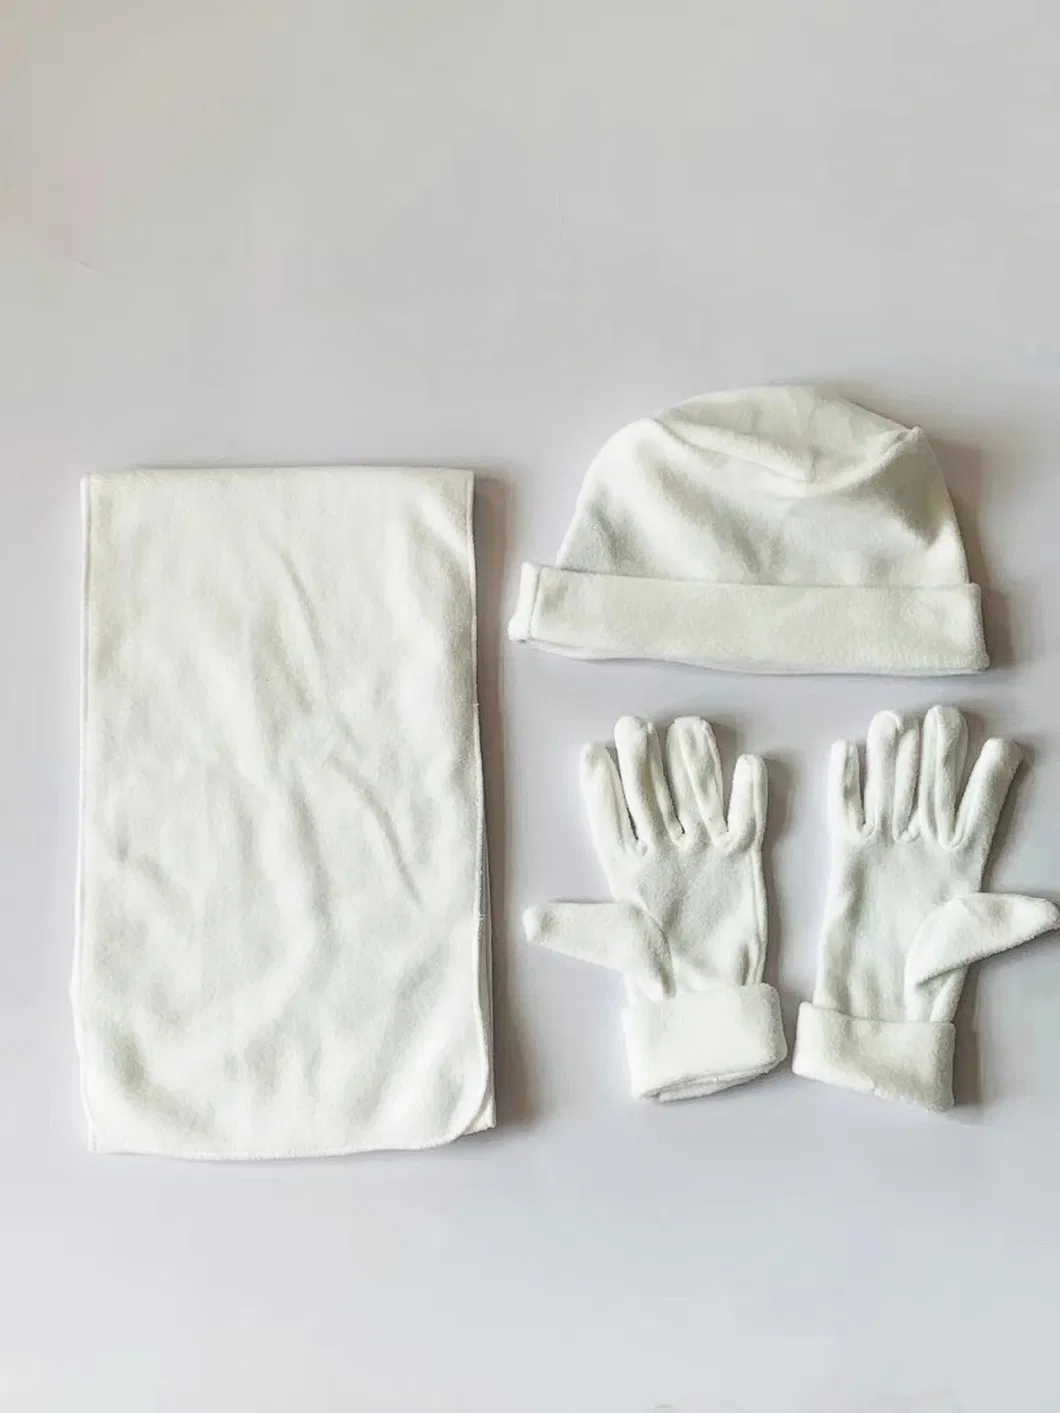 China Factory OEM Custom Logo Printed Embroidered Warm Polar Fleece Beanie Scarf Gloves Set